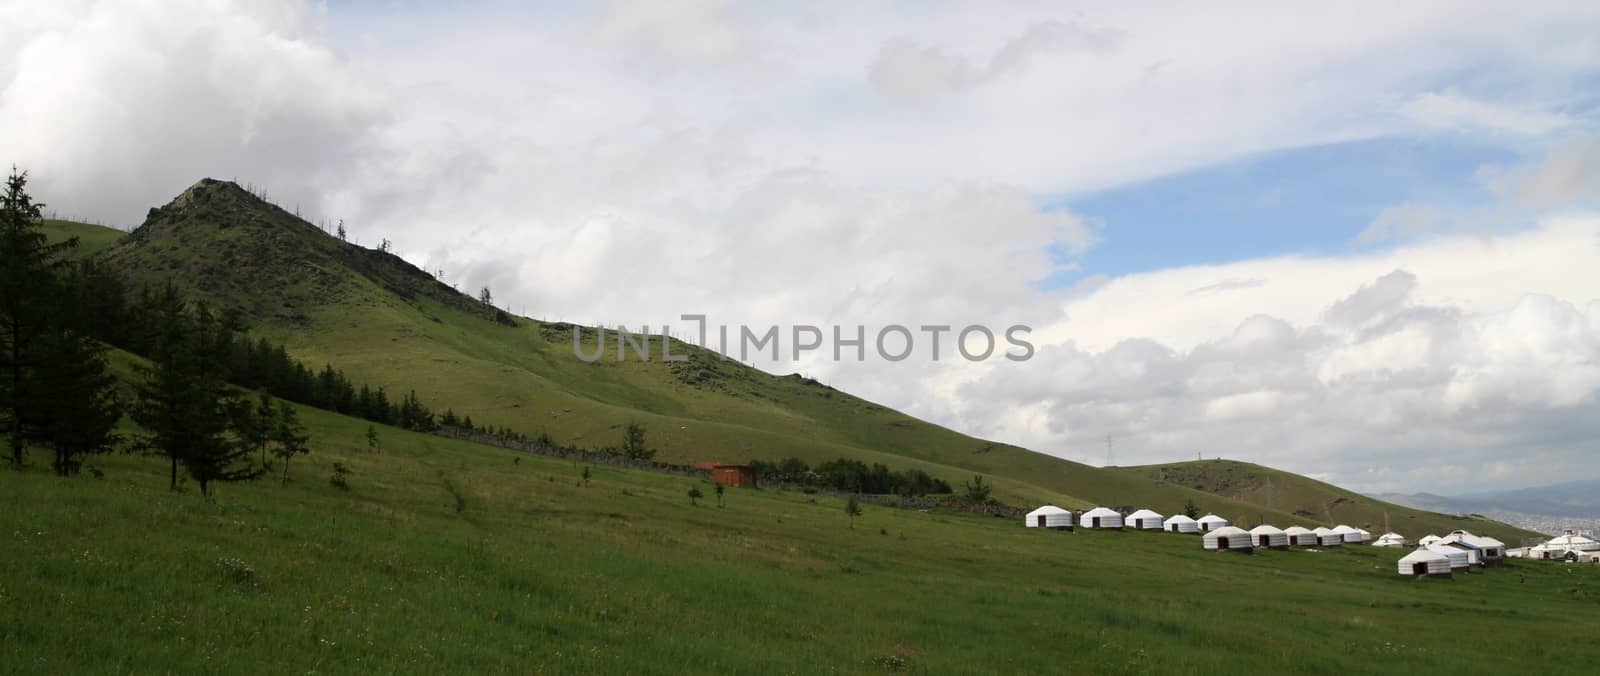 Mongolian Yurts near  Ullanbaator in Mongolia by jnerad